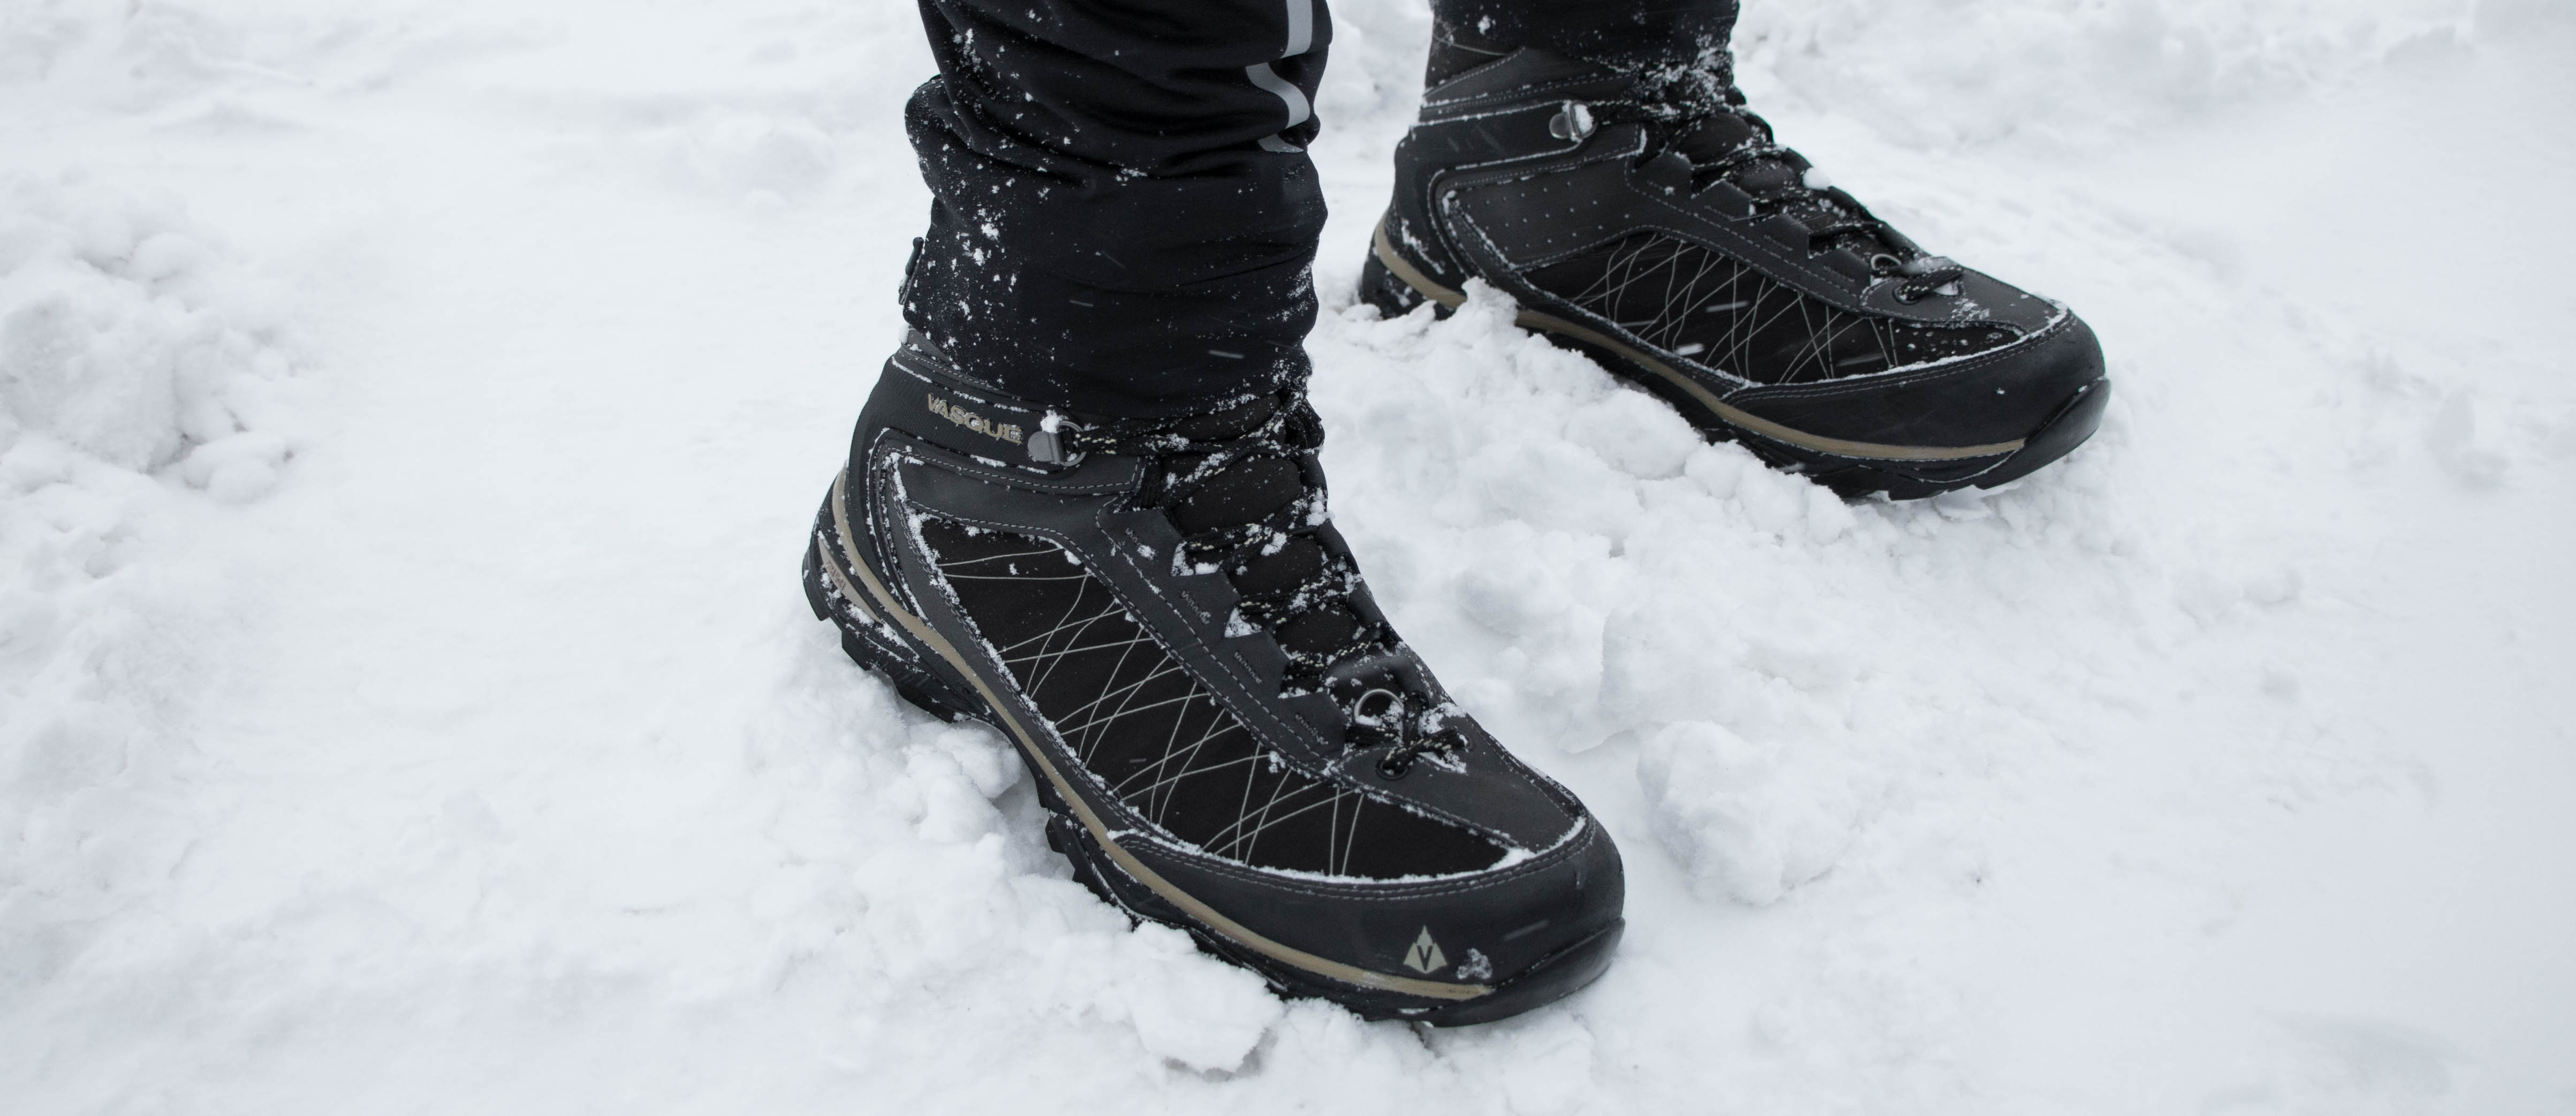 vasque coldspark ultradry winter boots womens